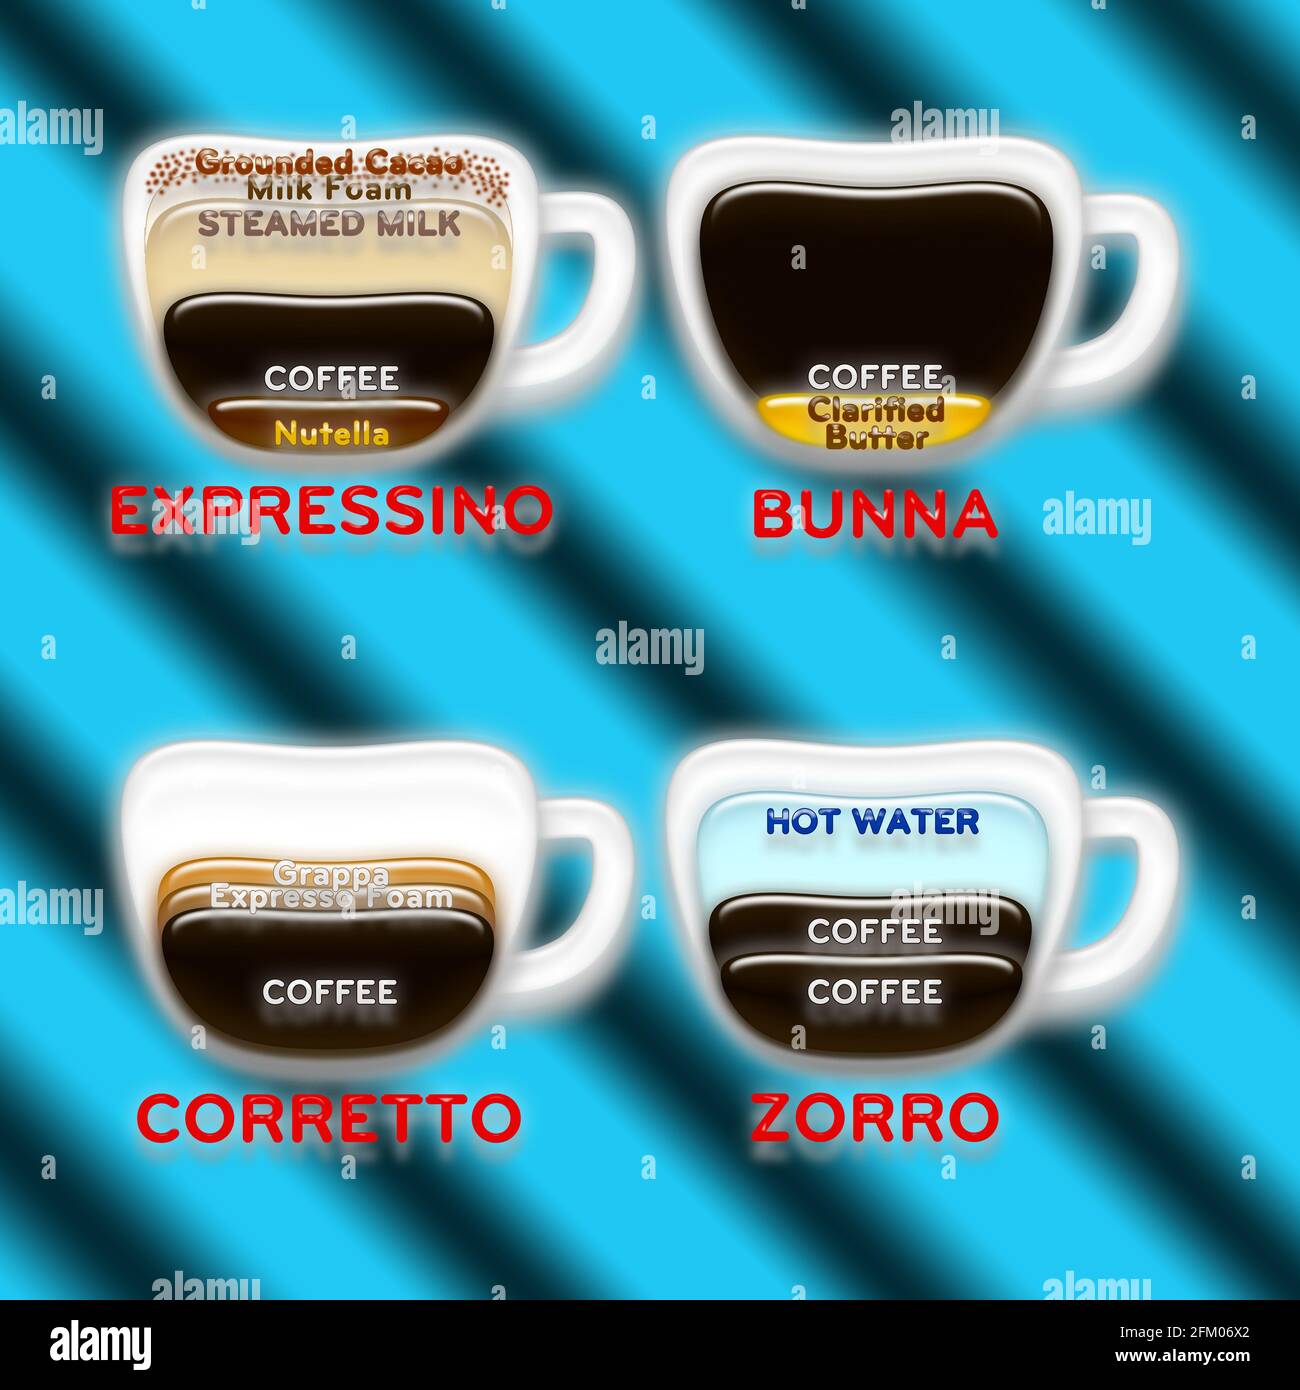 Cafe table Espresso tumbler Grappa coffee-cup coffee coffee-kind